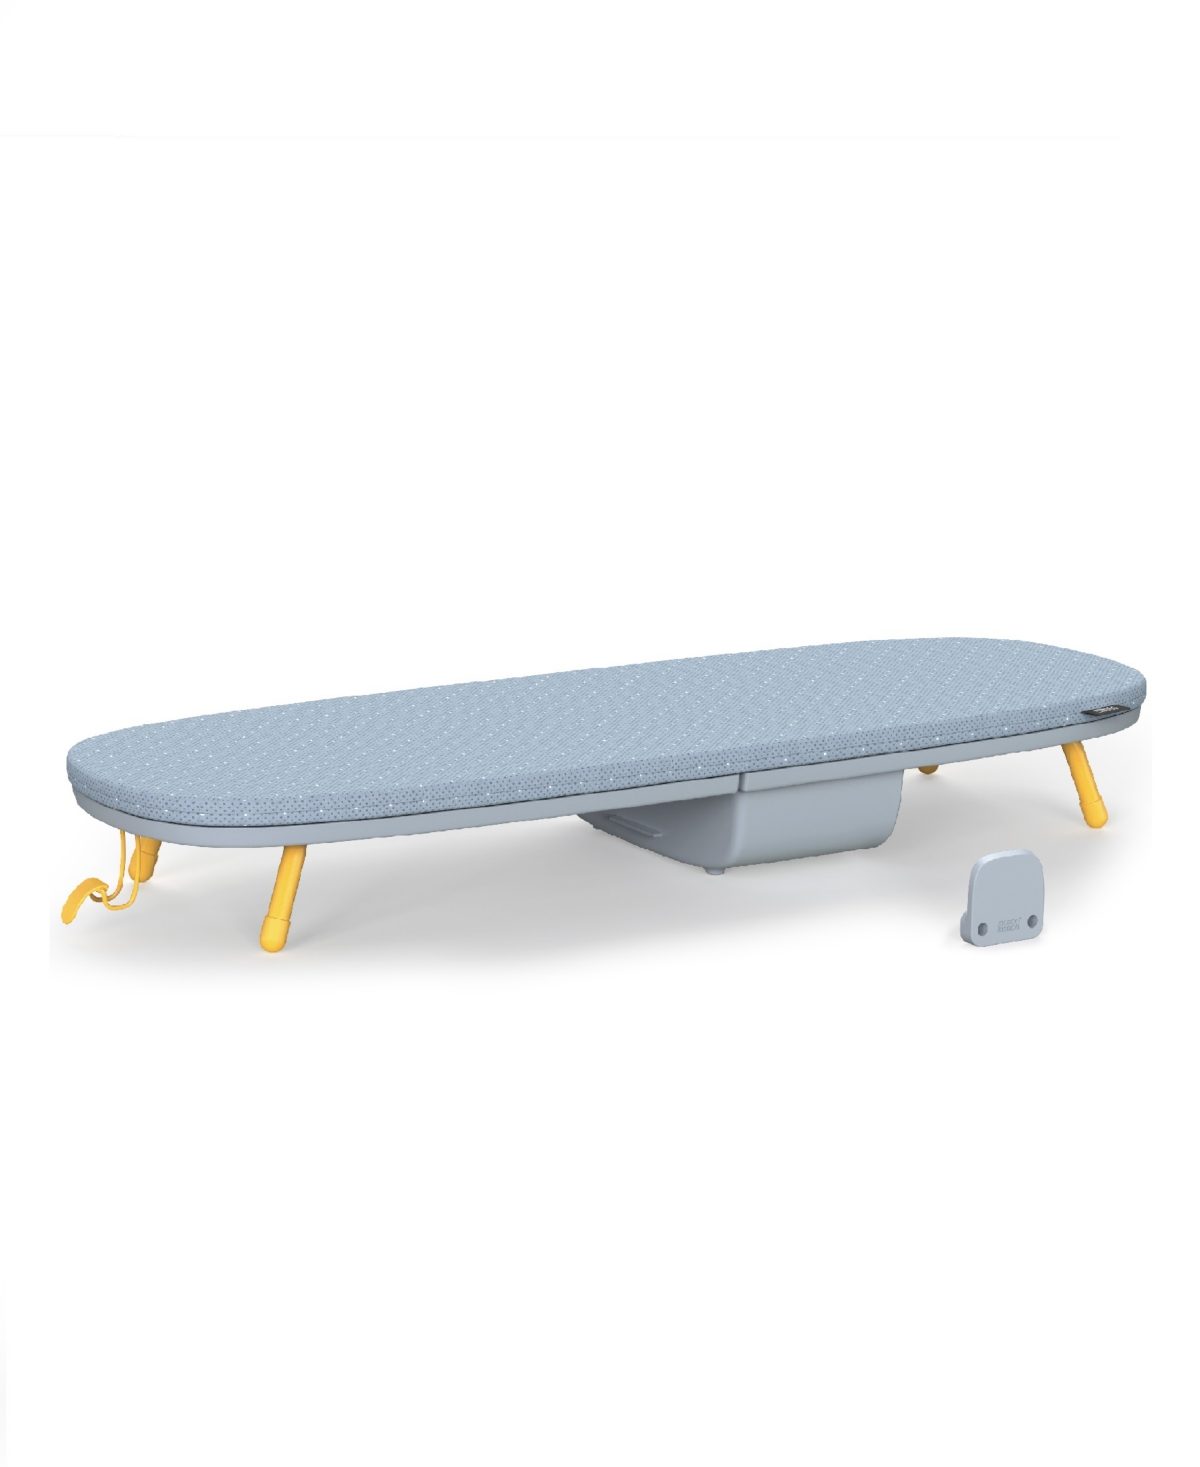 Pocket Folding Table-Top Ironing Board - Gray, Yellow